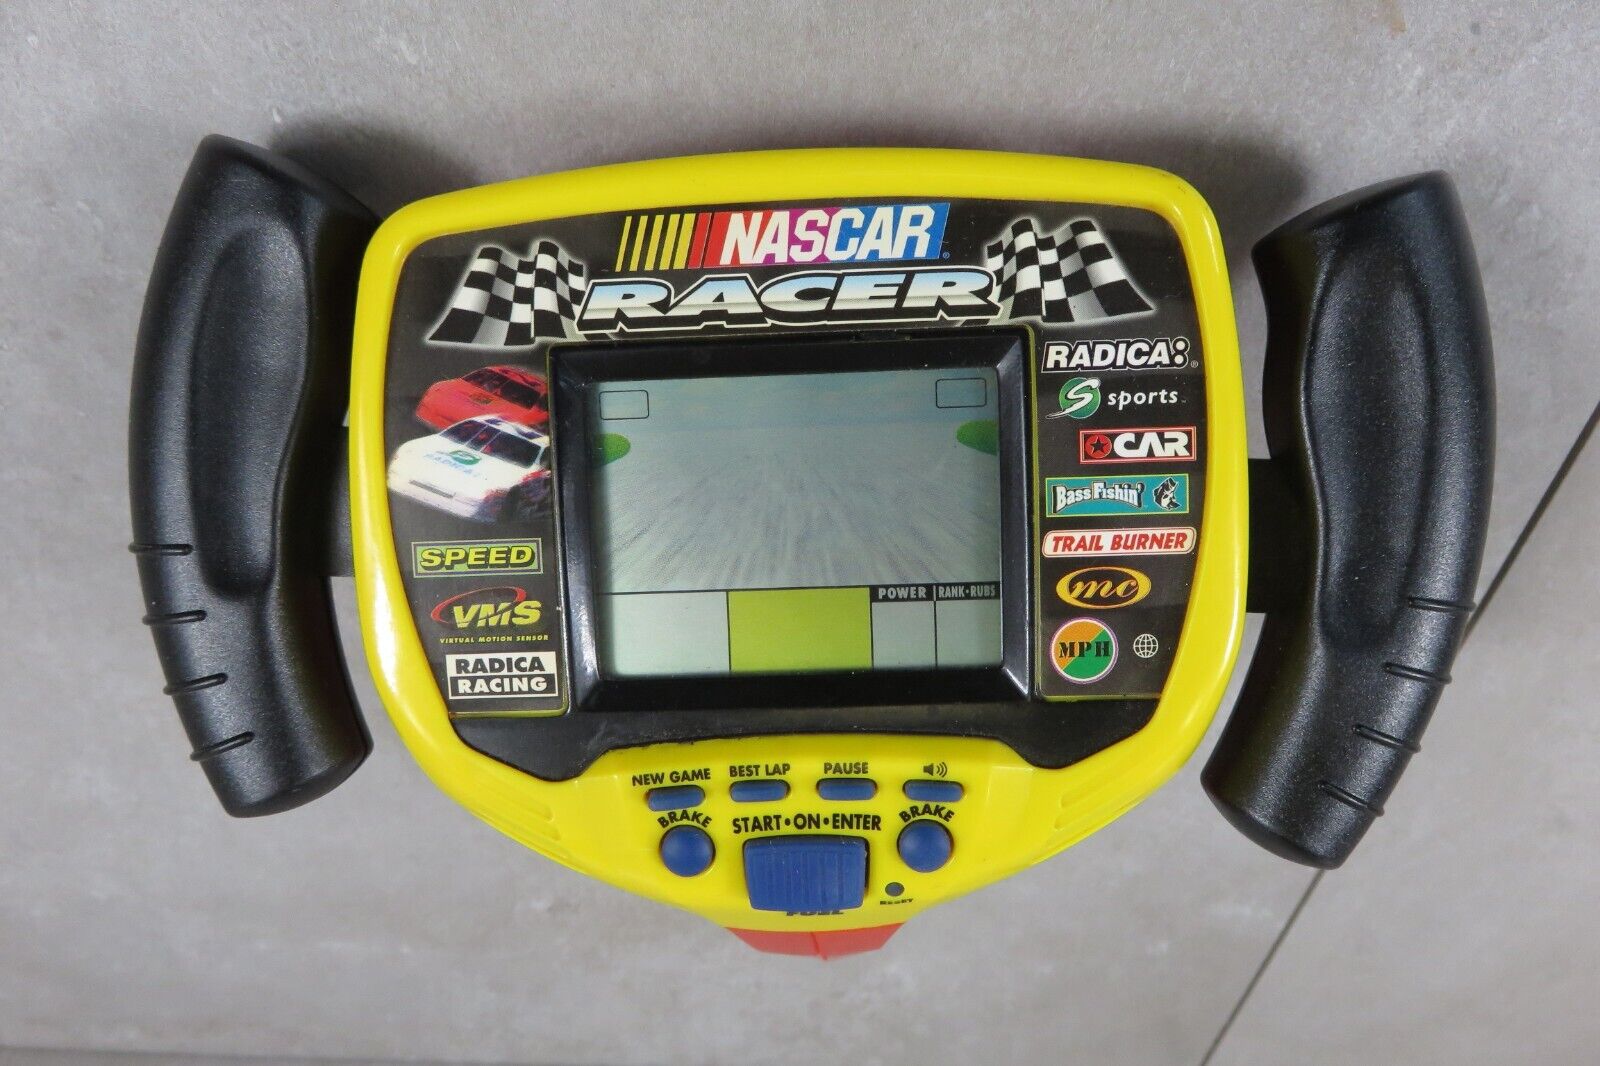 Radica Nascar Racer Handheld Game Virtual Racing - Vintage 1998 - Tested Working